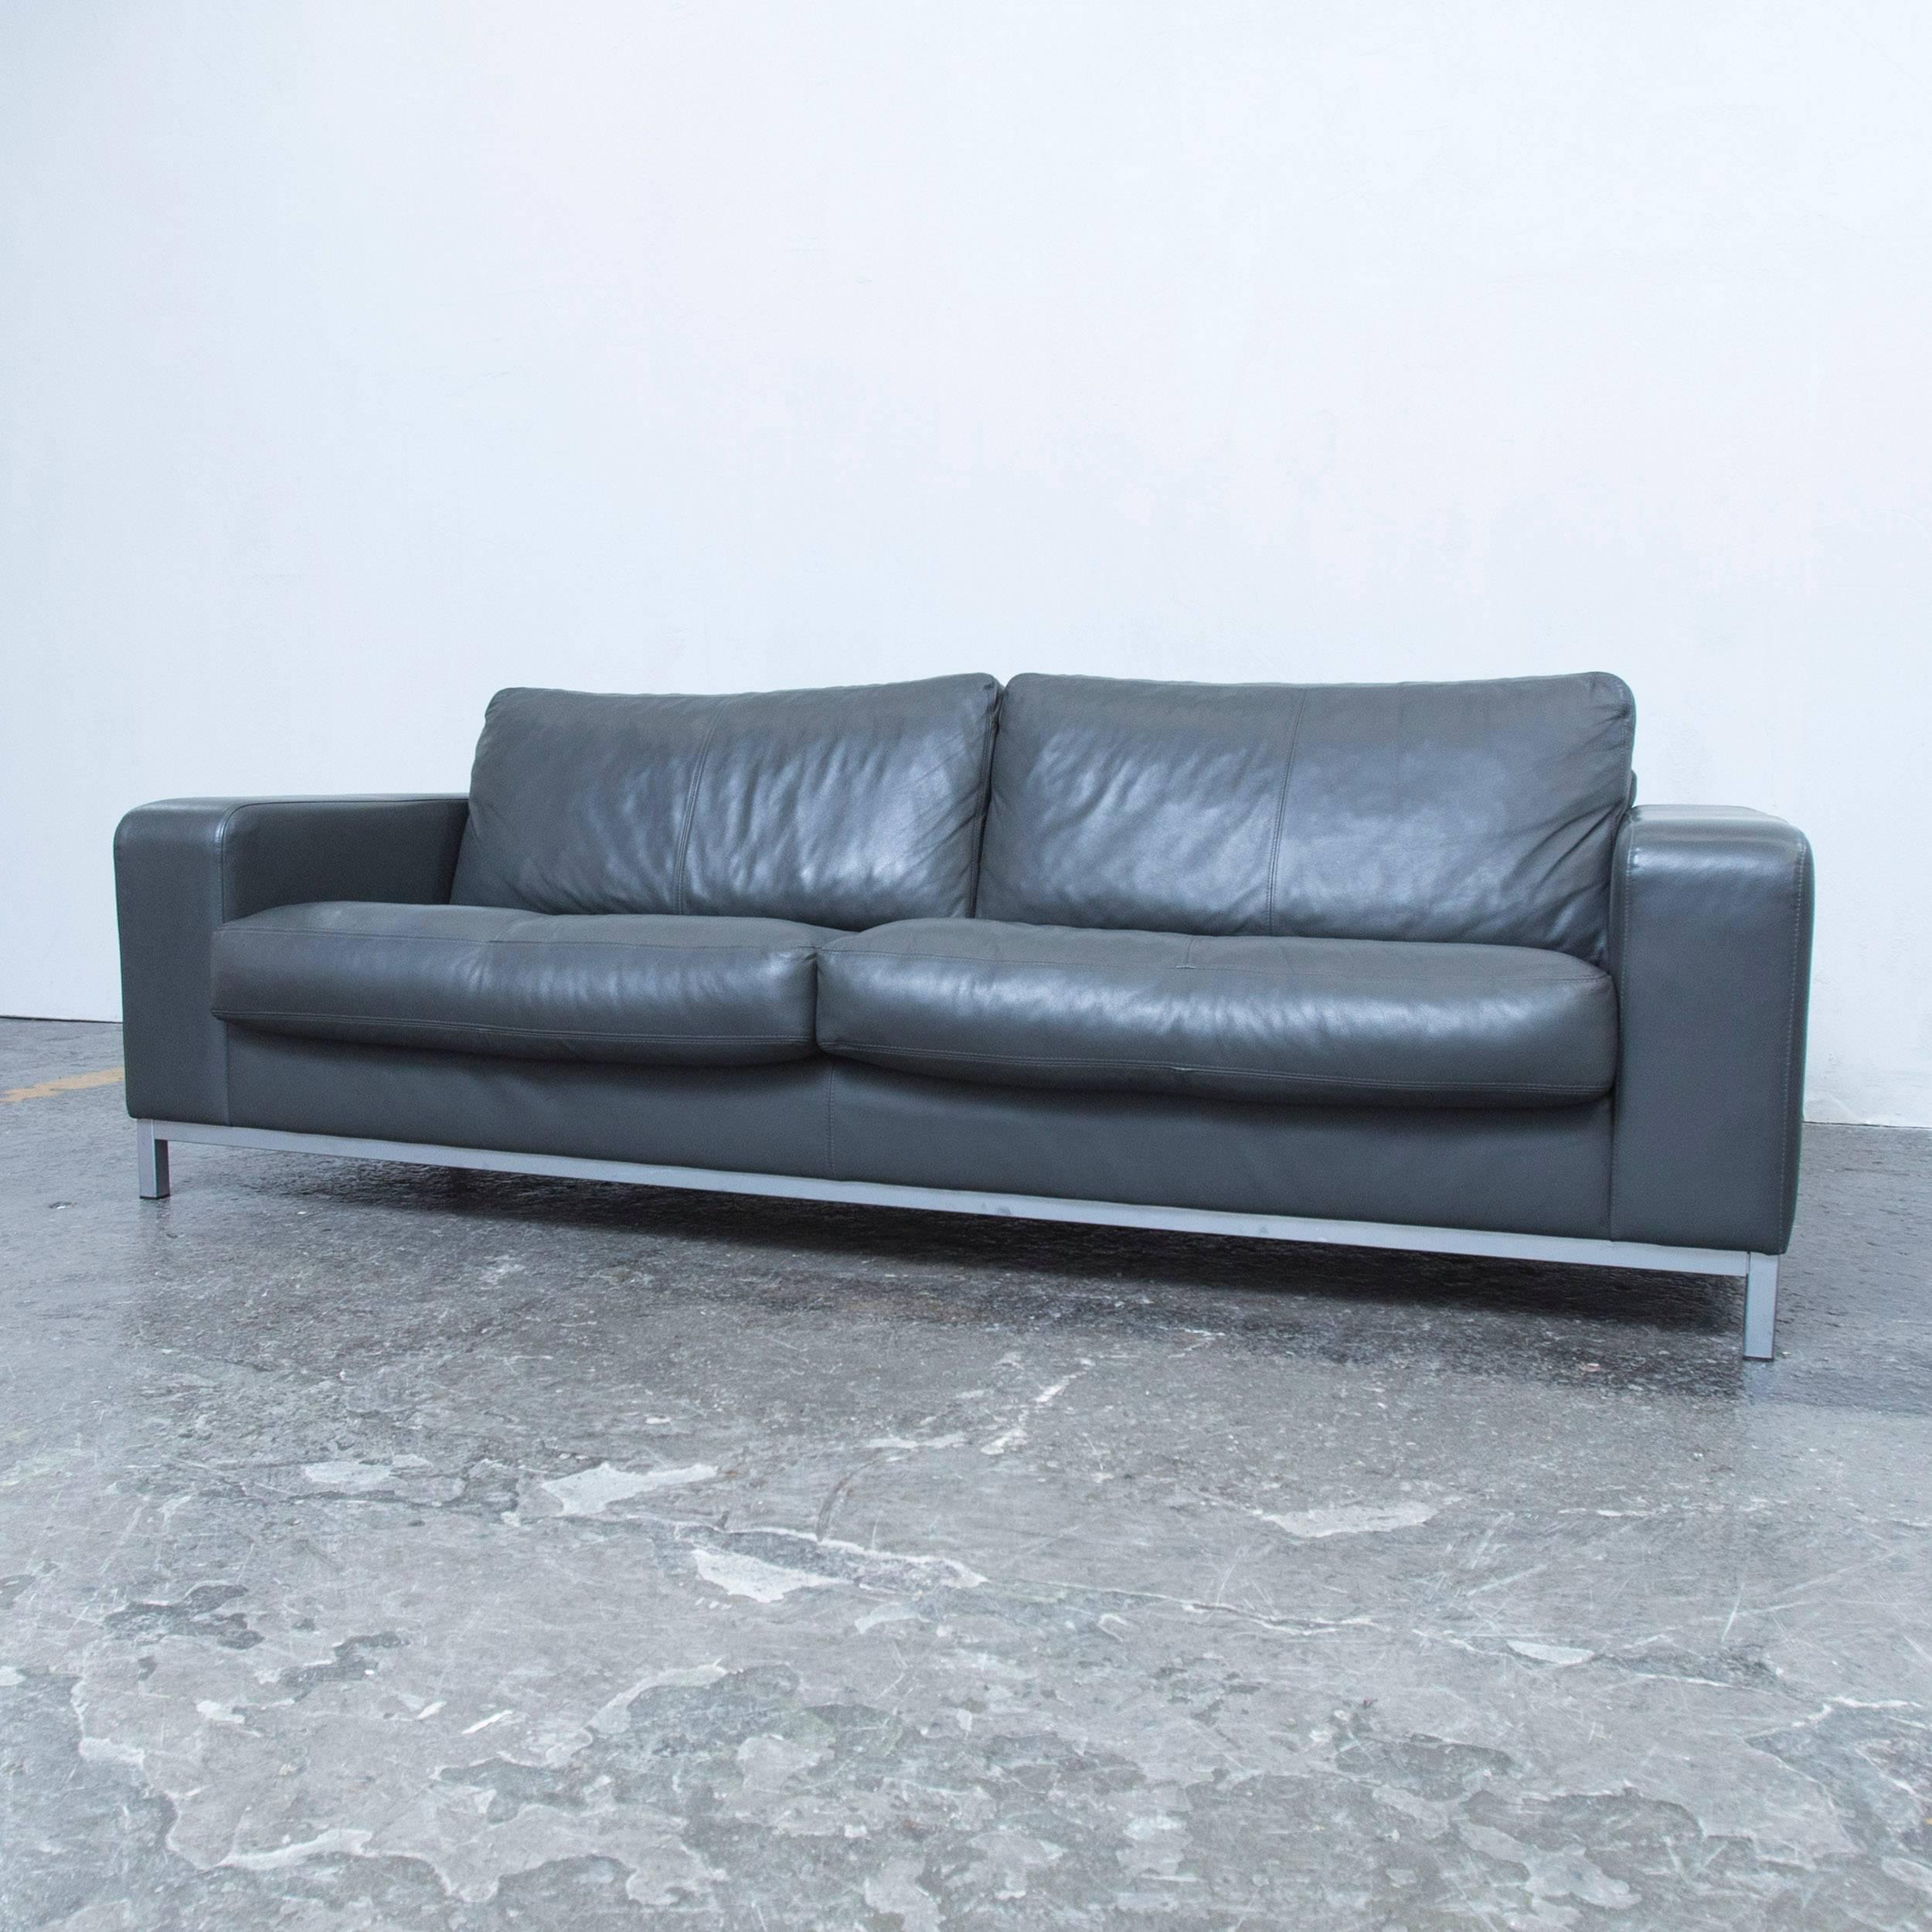 German Machalke Designer Sofa in Grey Leather Three-Seat Couch, Modern For Sale